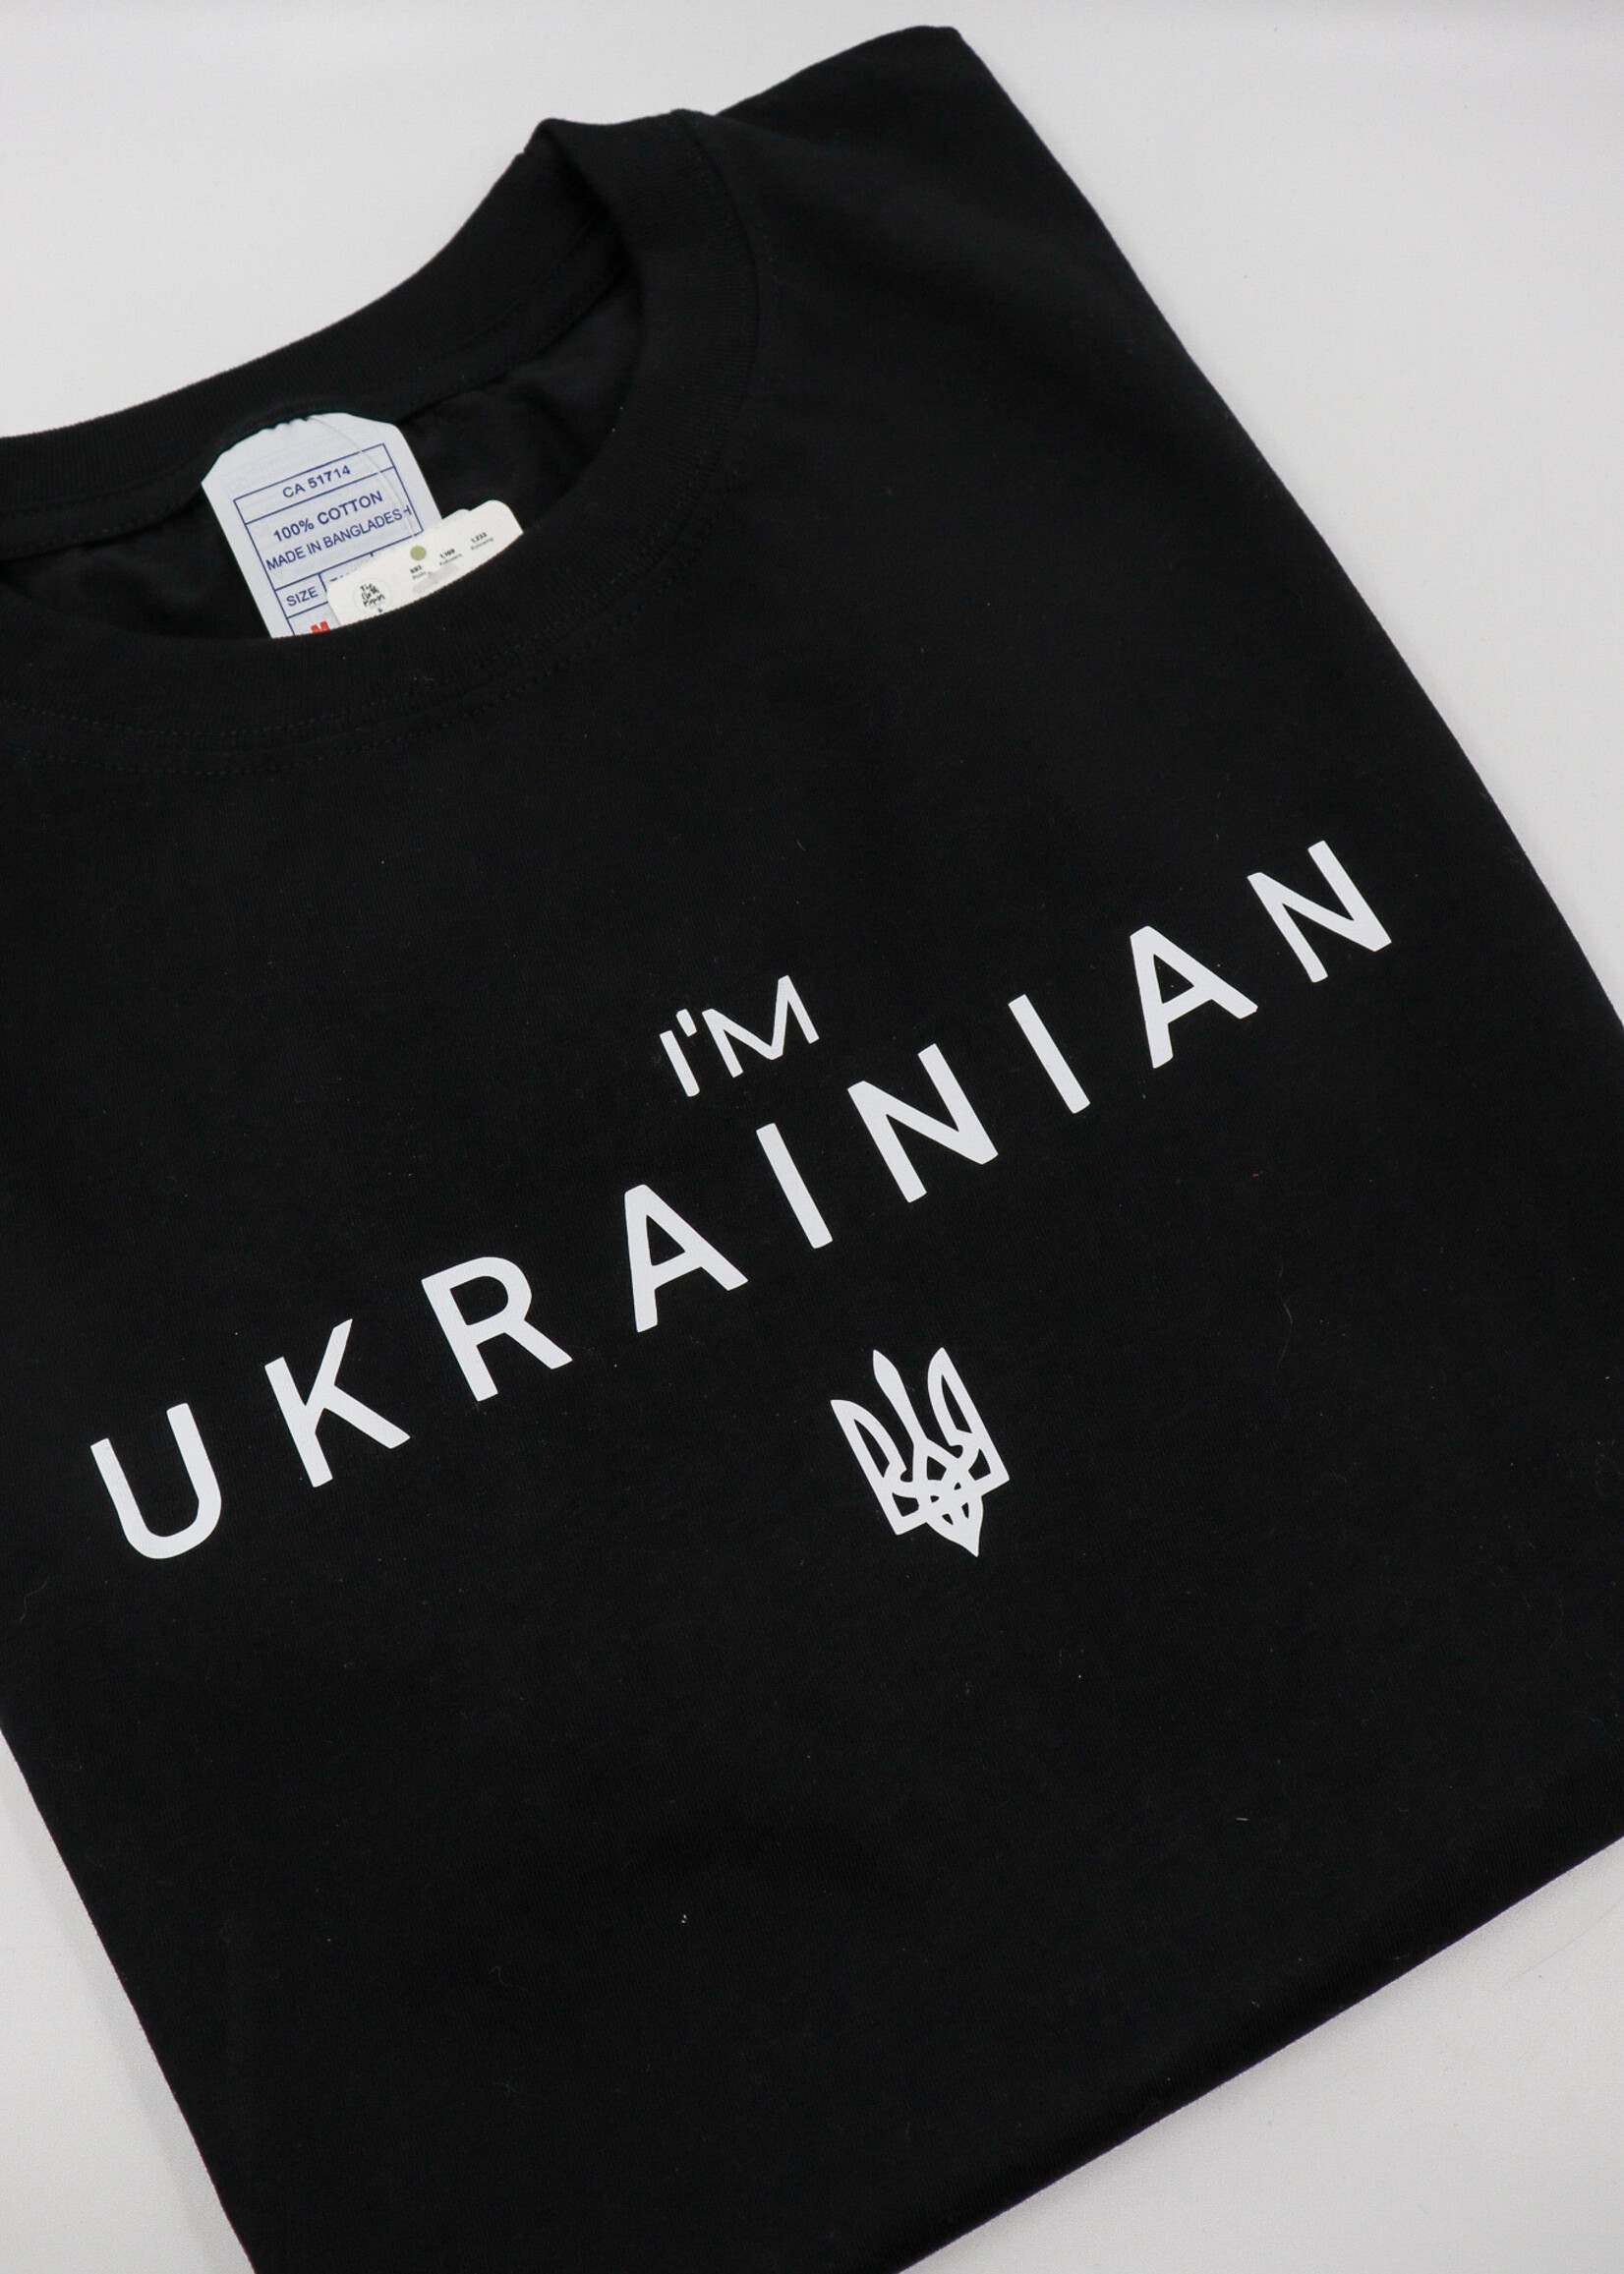 APPAREL - T-shirt (Unisex), I'm Ukrainian